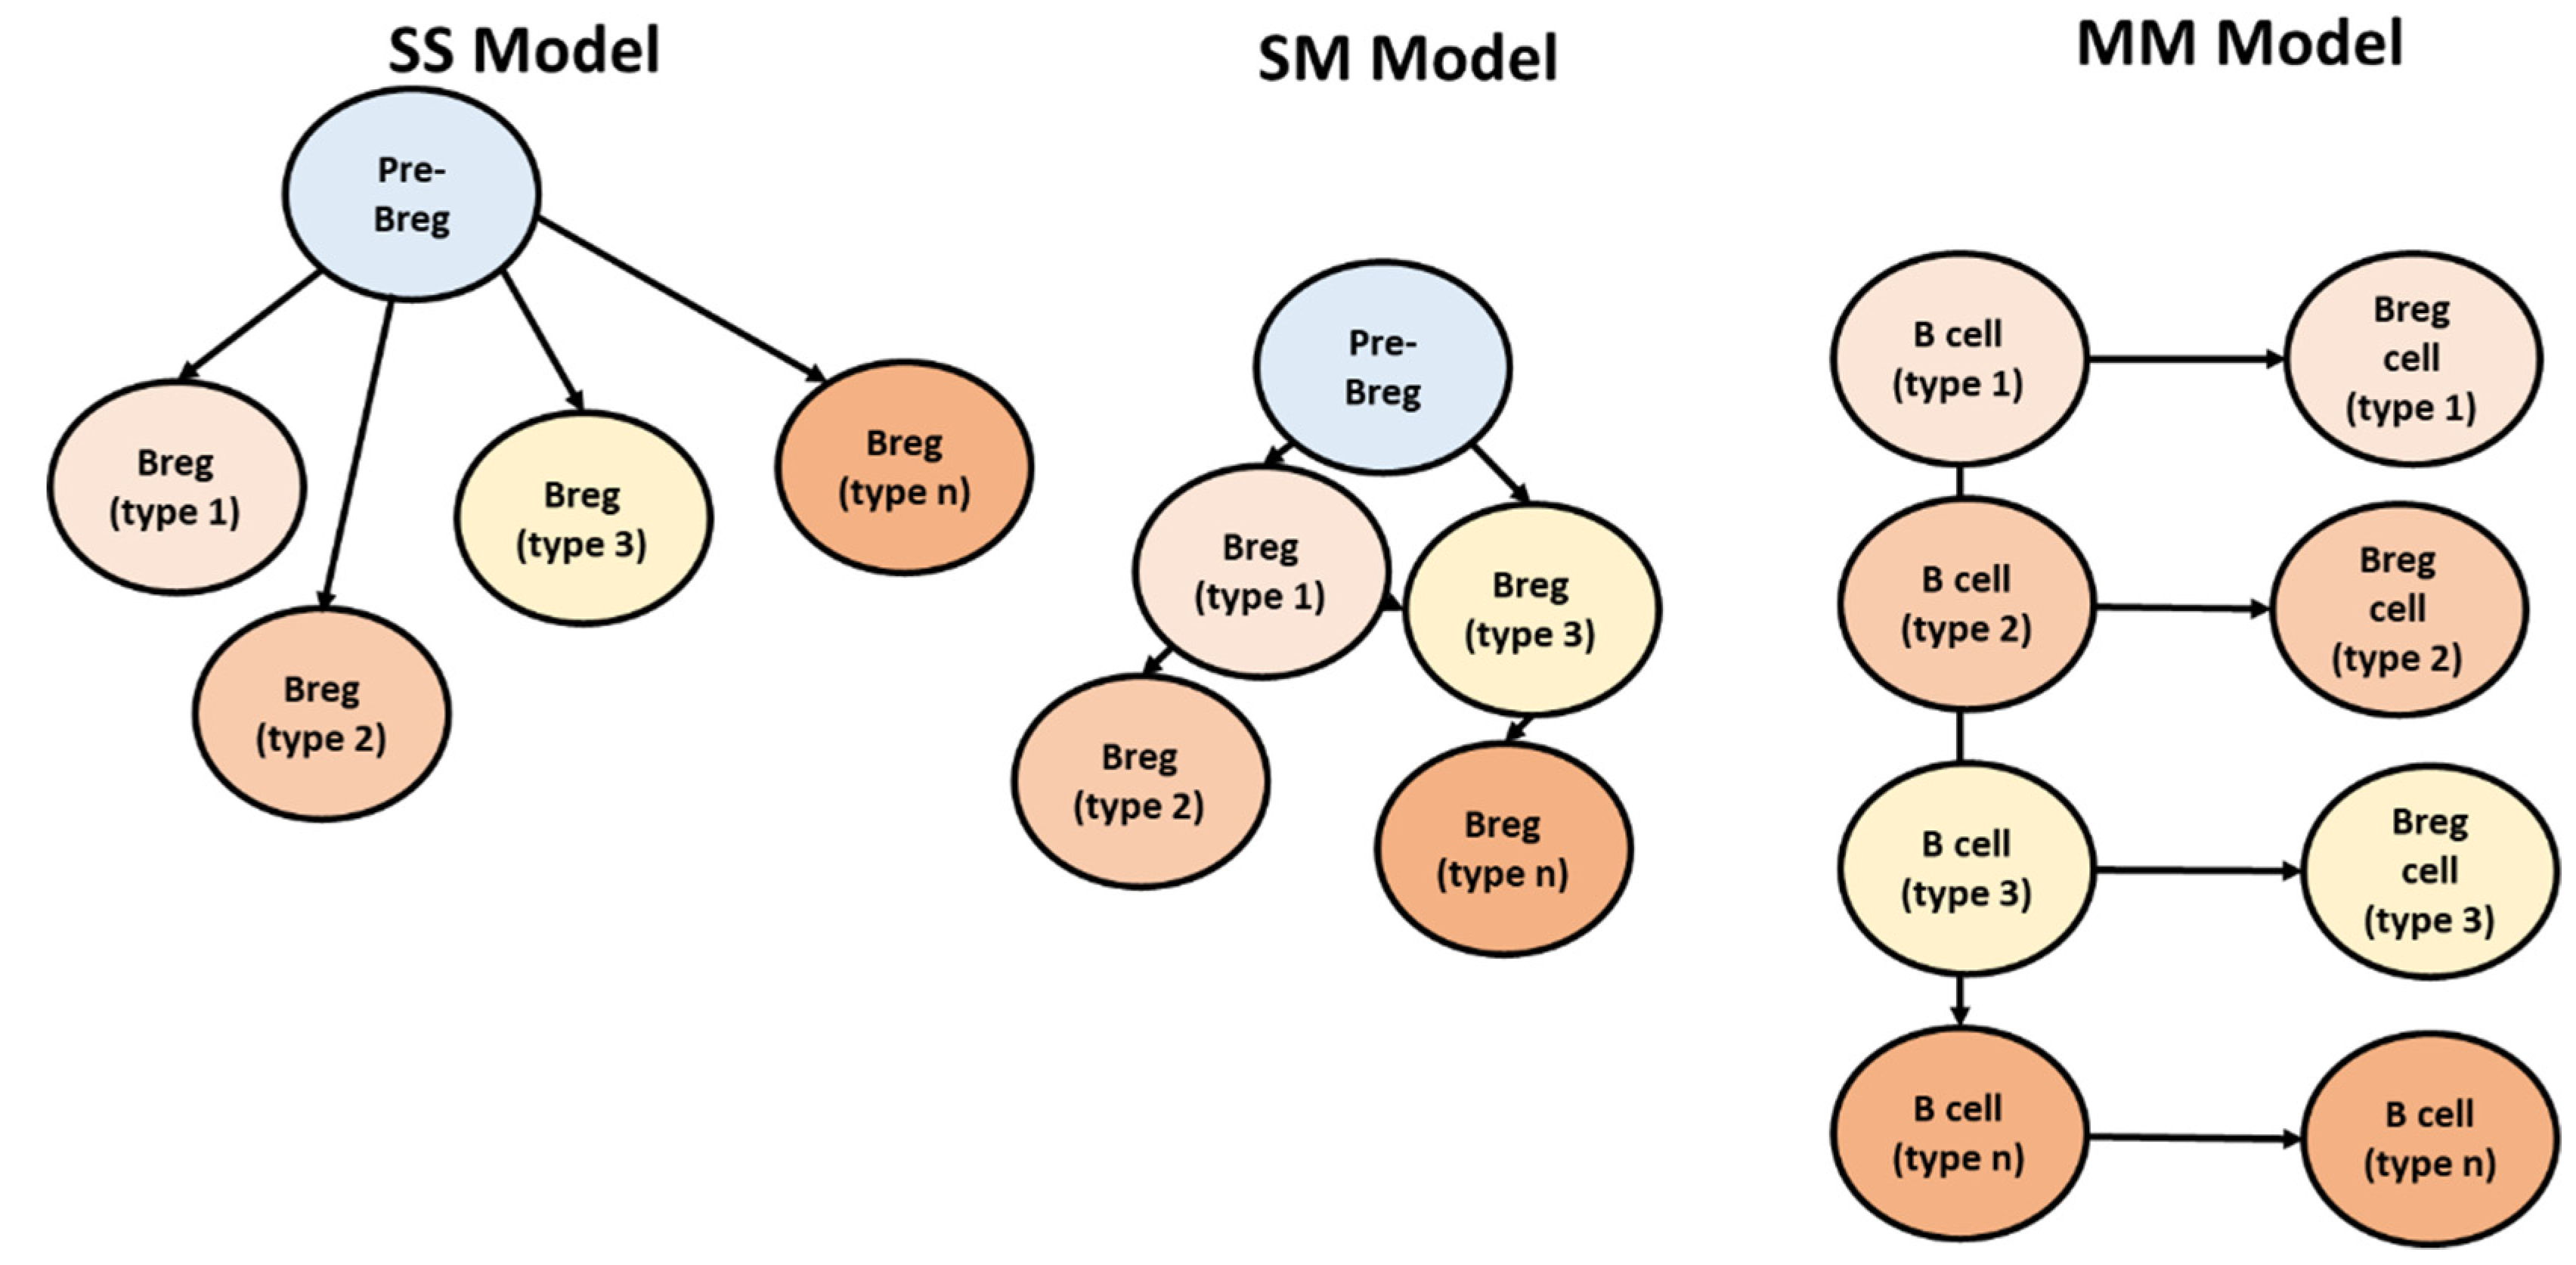 SMmodel – hydrology